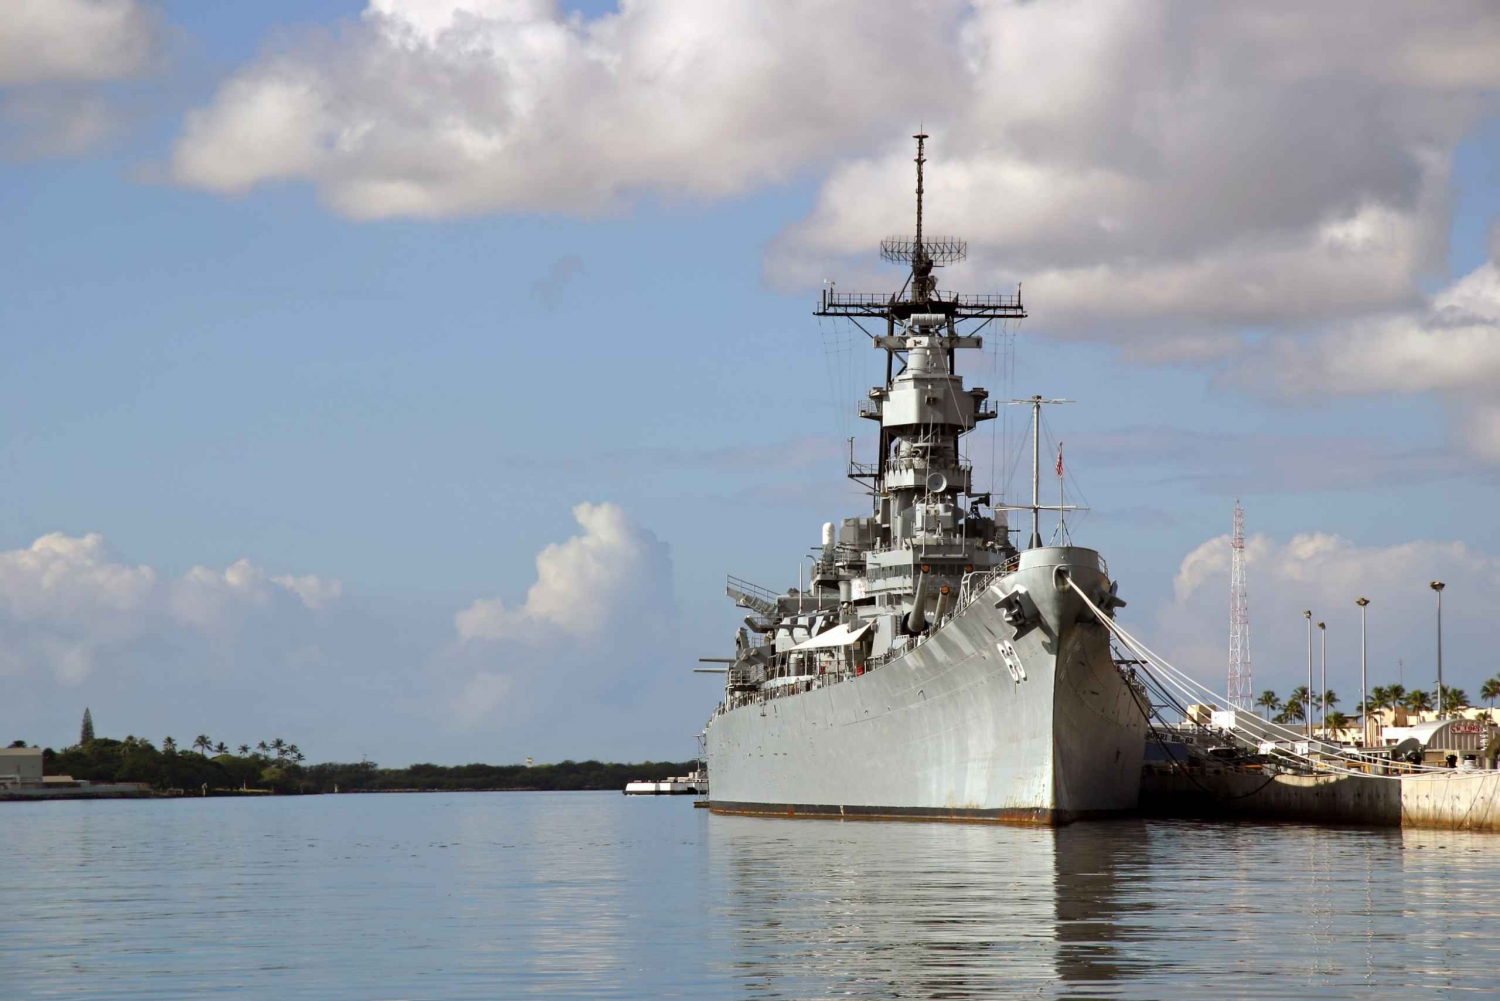 Oahu: Pearl Harbor, USS Arizona, Might Mo i Honolulu Tour